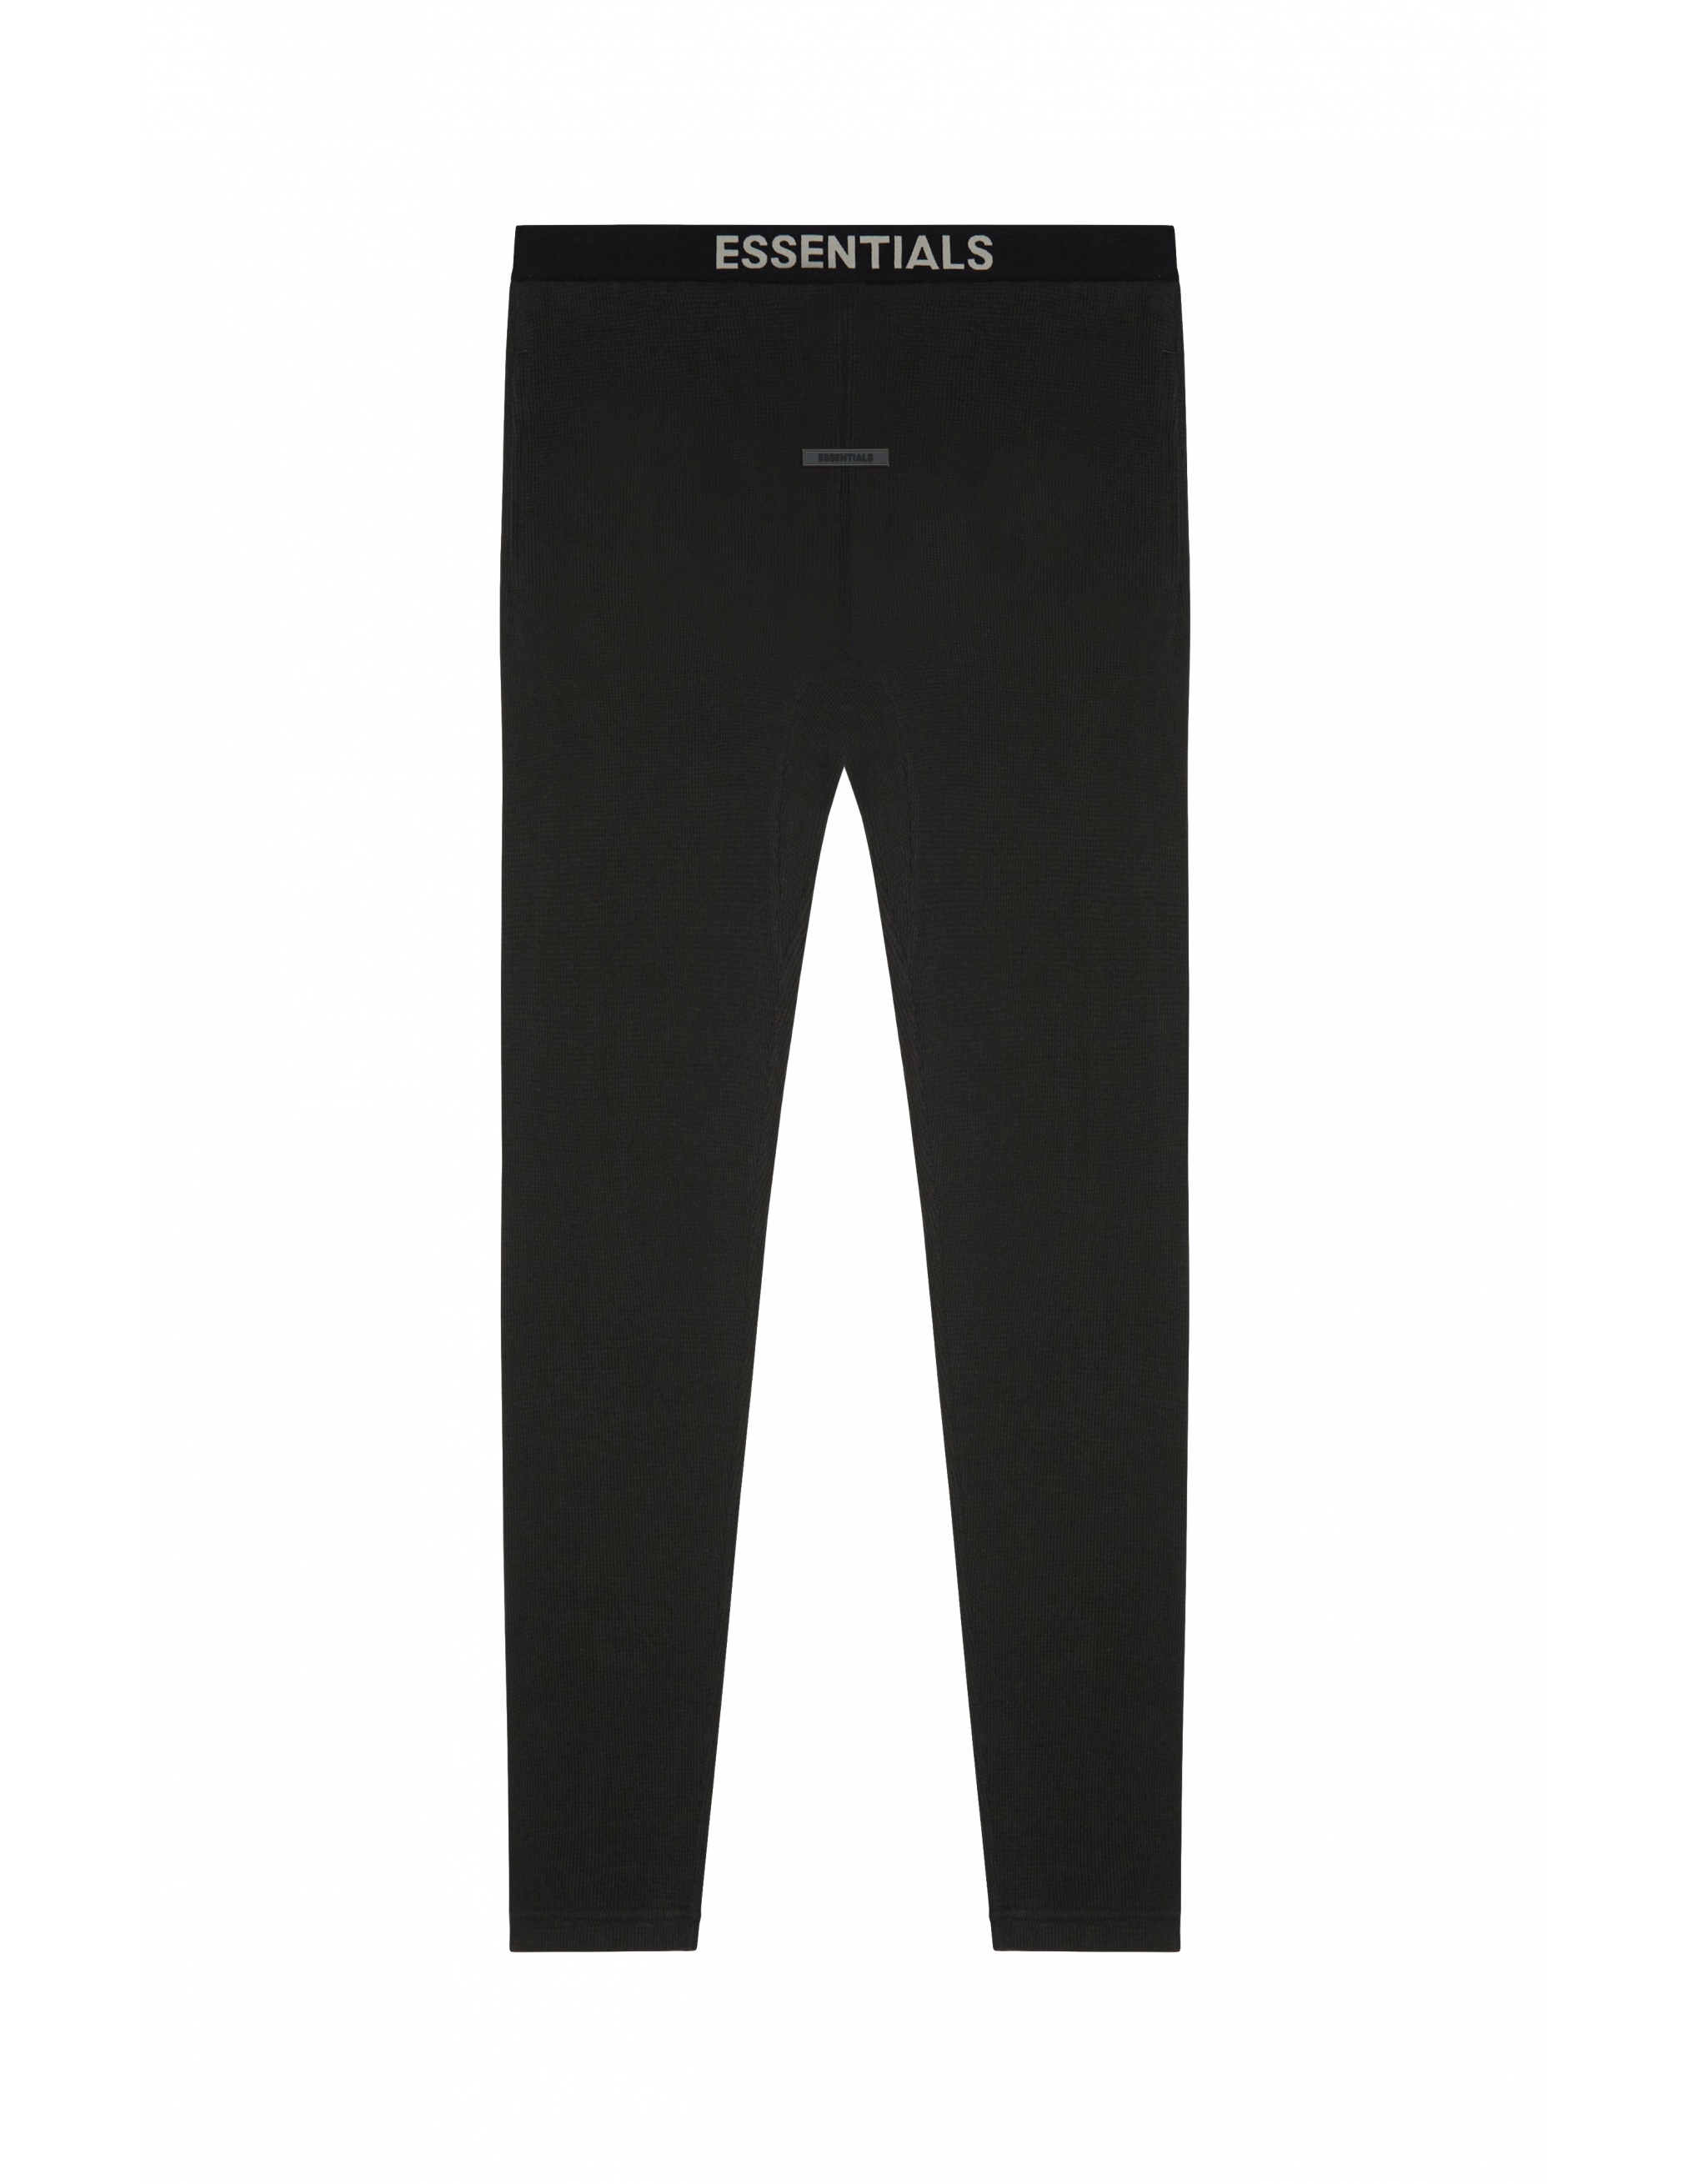 Черные термо брюки на резинке Fear of God Essentials 130SU212040F, размер XXL;XL;L;M;S - фото 1